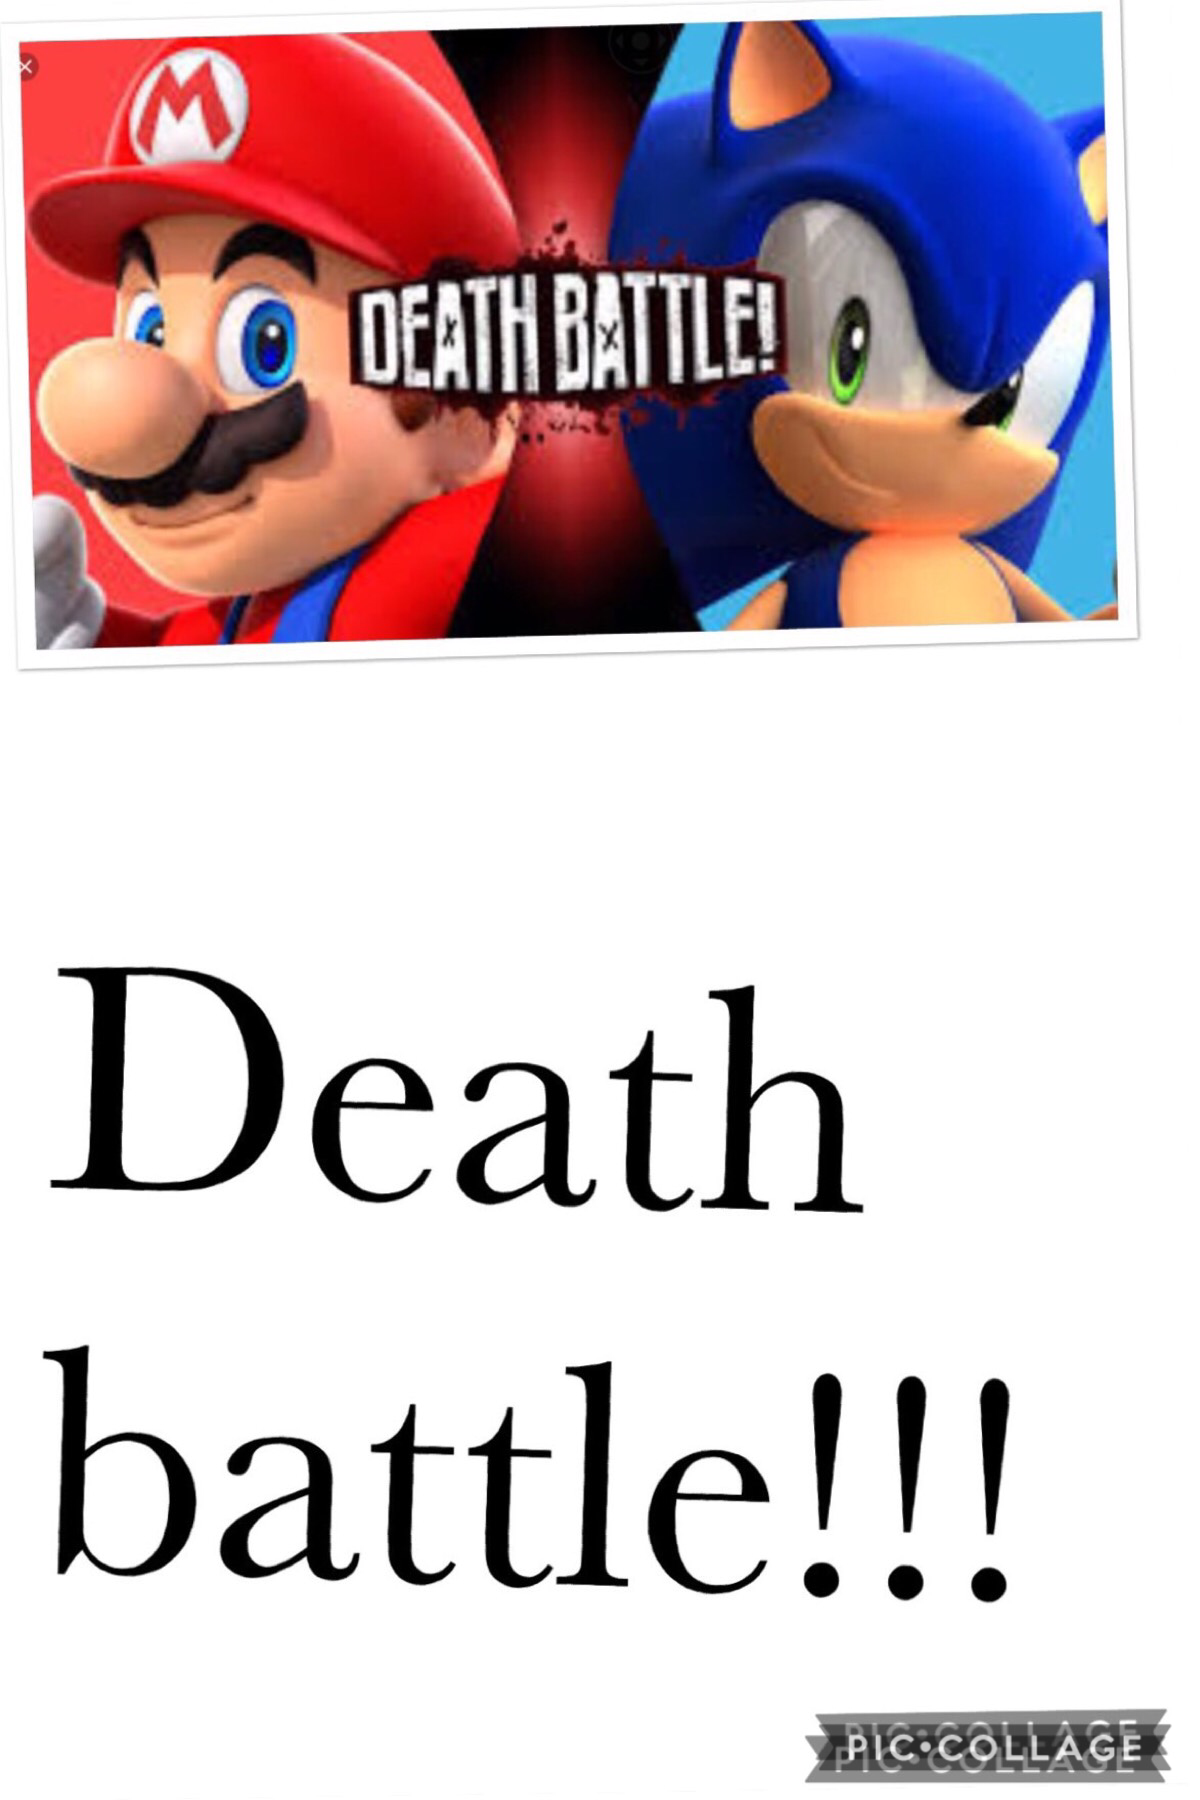 Death battle 